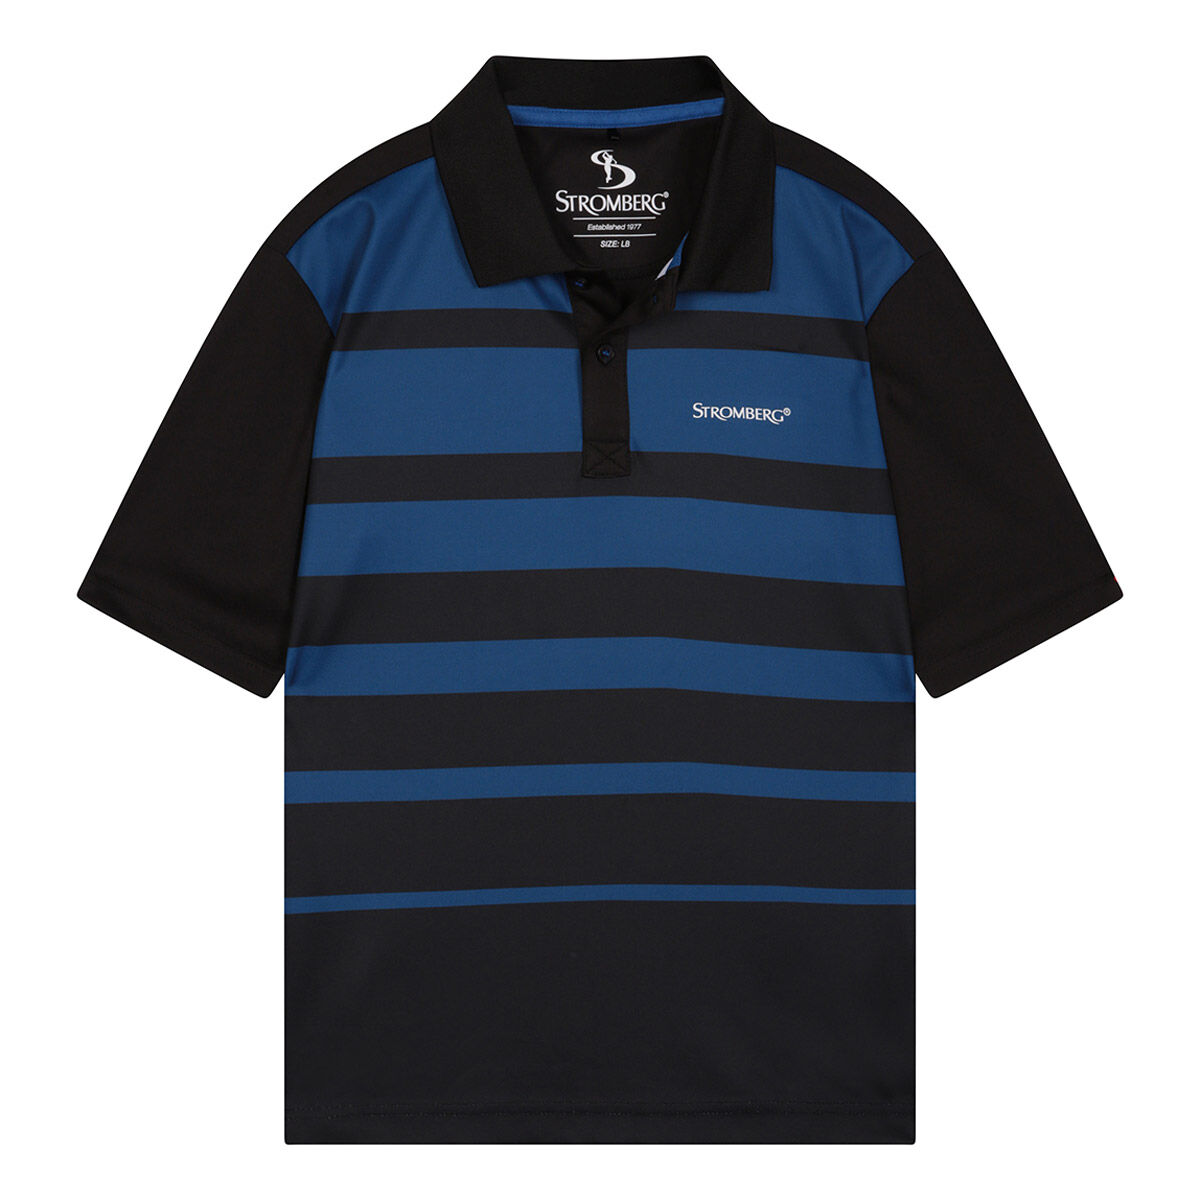 Stromberg Junior Strike Stretch Golf Polo Shirt, Unisex, Tapshoe/true blue, 11-12 years | American Golf